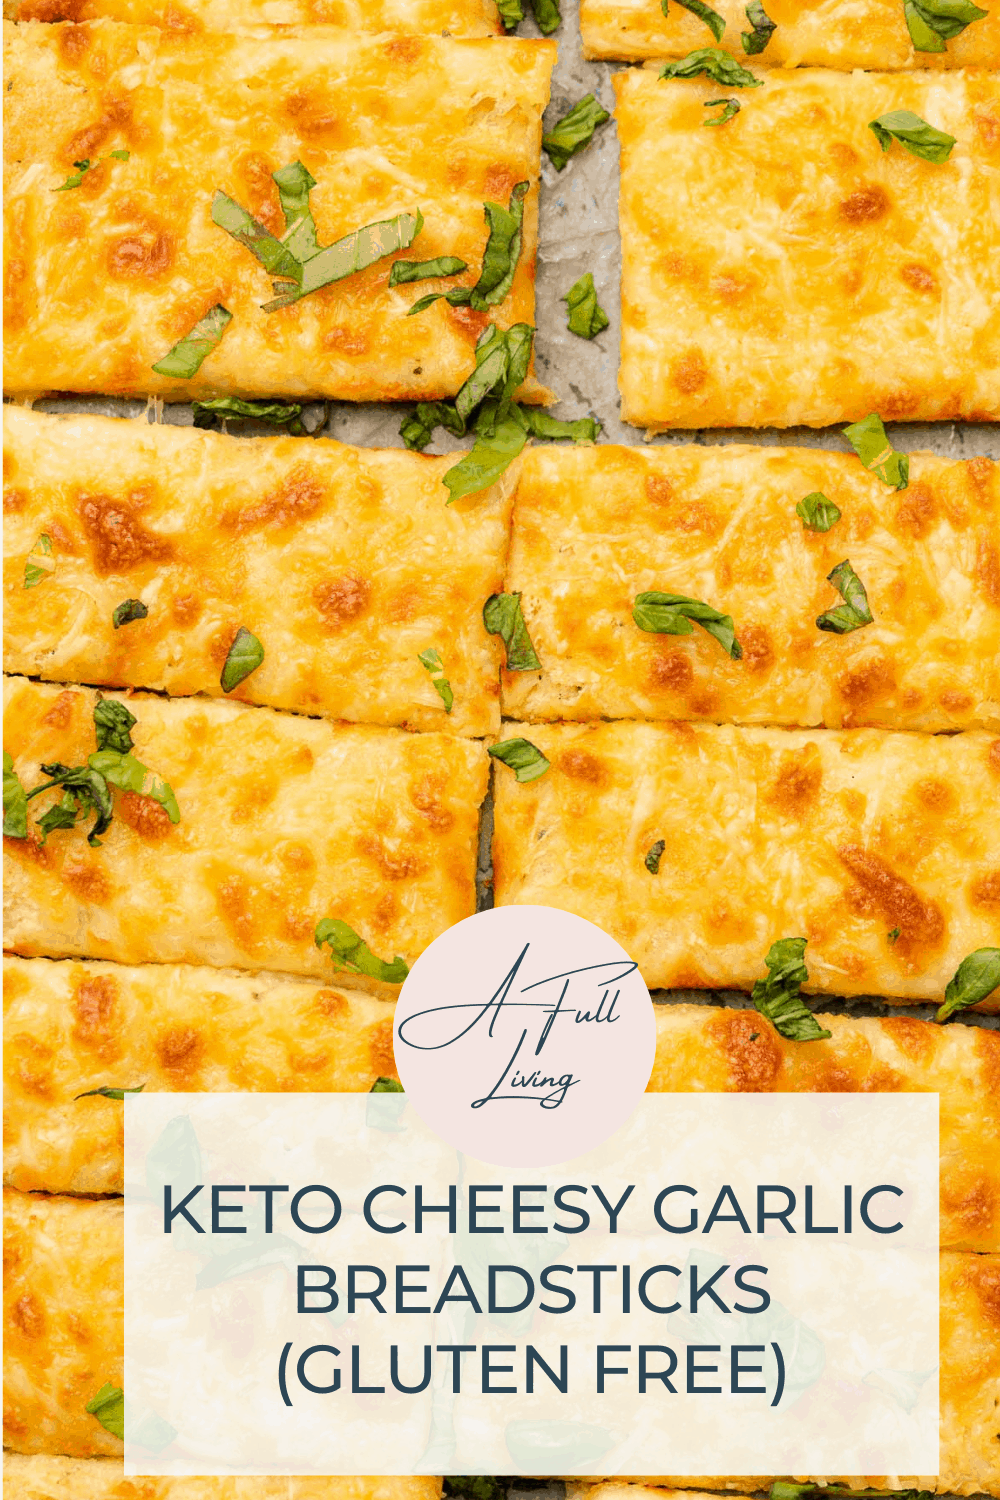 Keto Cheesy Garlic Breadsticks (Gluten Free) graphic with text